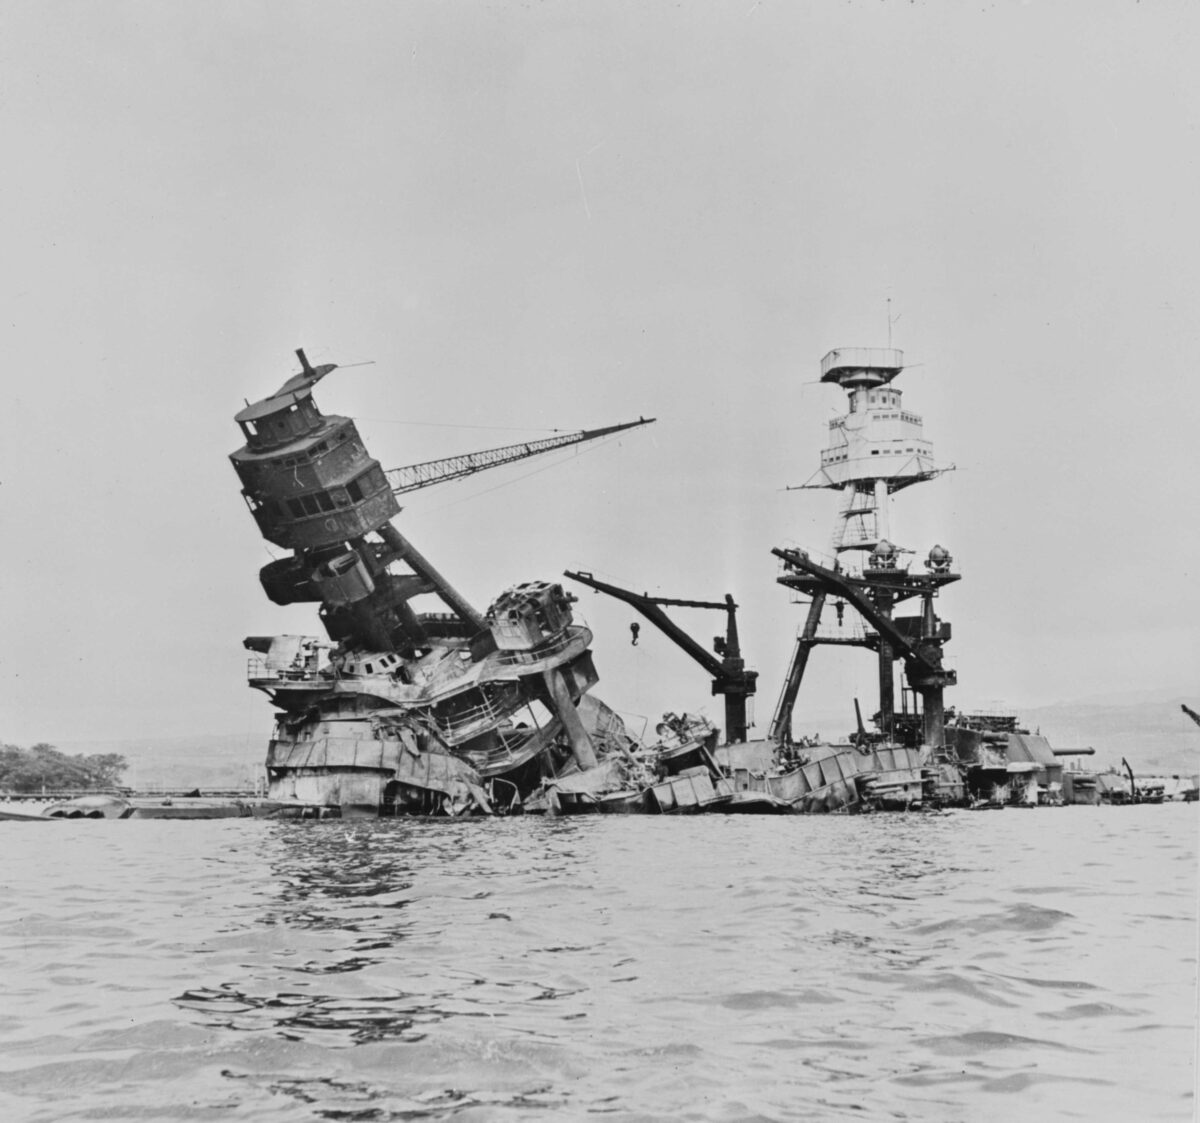 Battleship Arizona